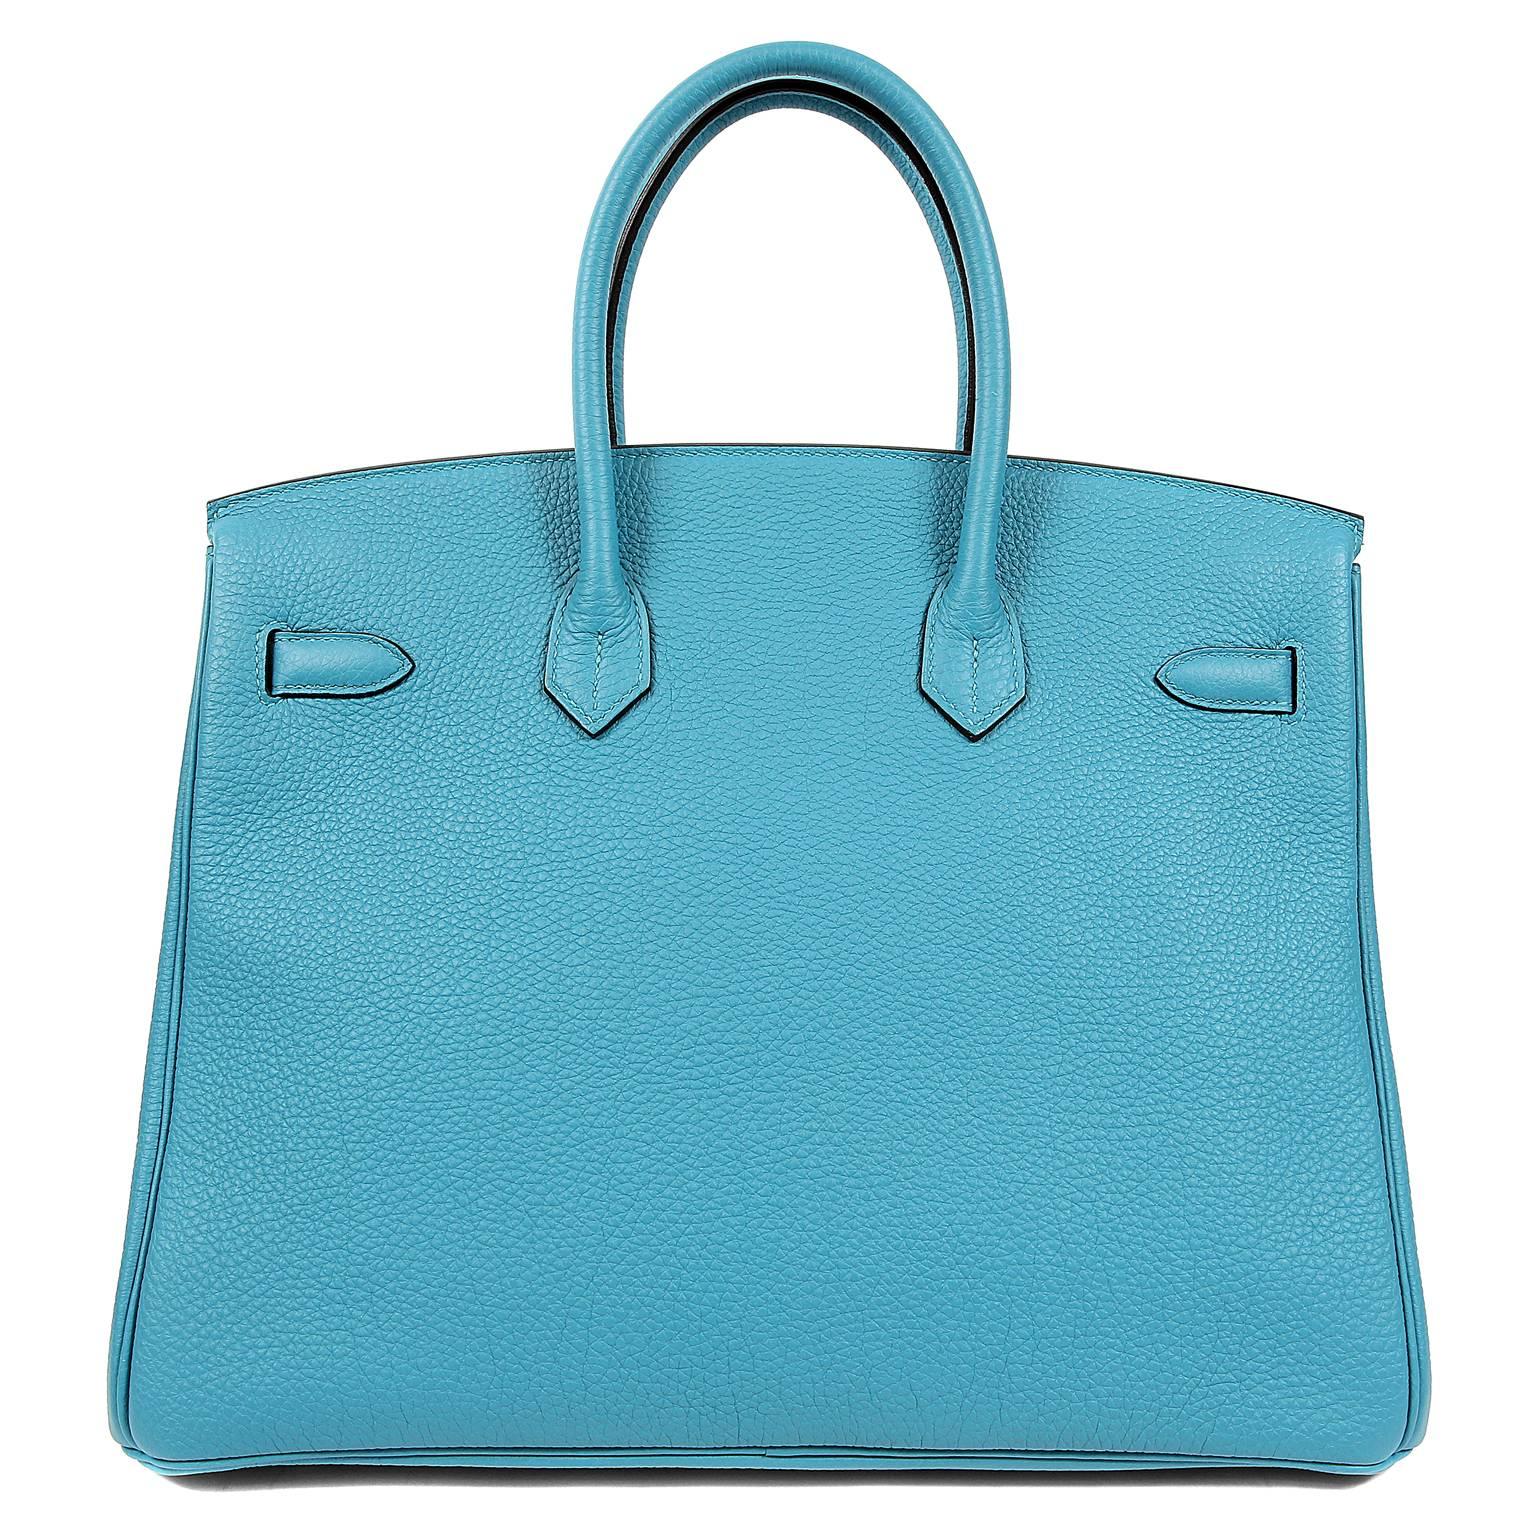 Blue Hermes Turquoise Togo 35 cm Birkin Bag with GHW For Sale